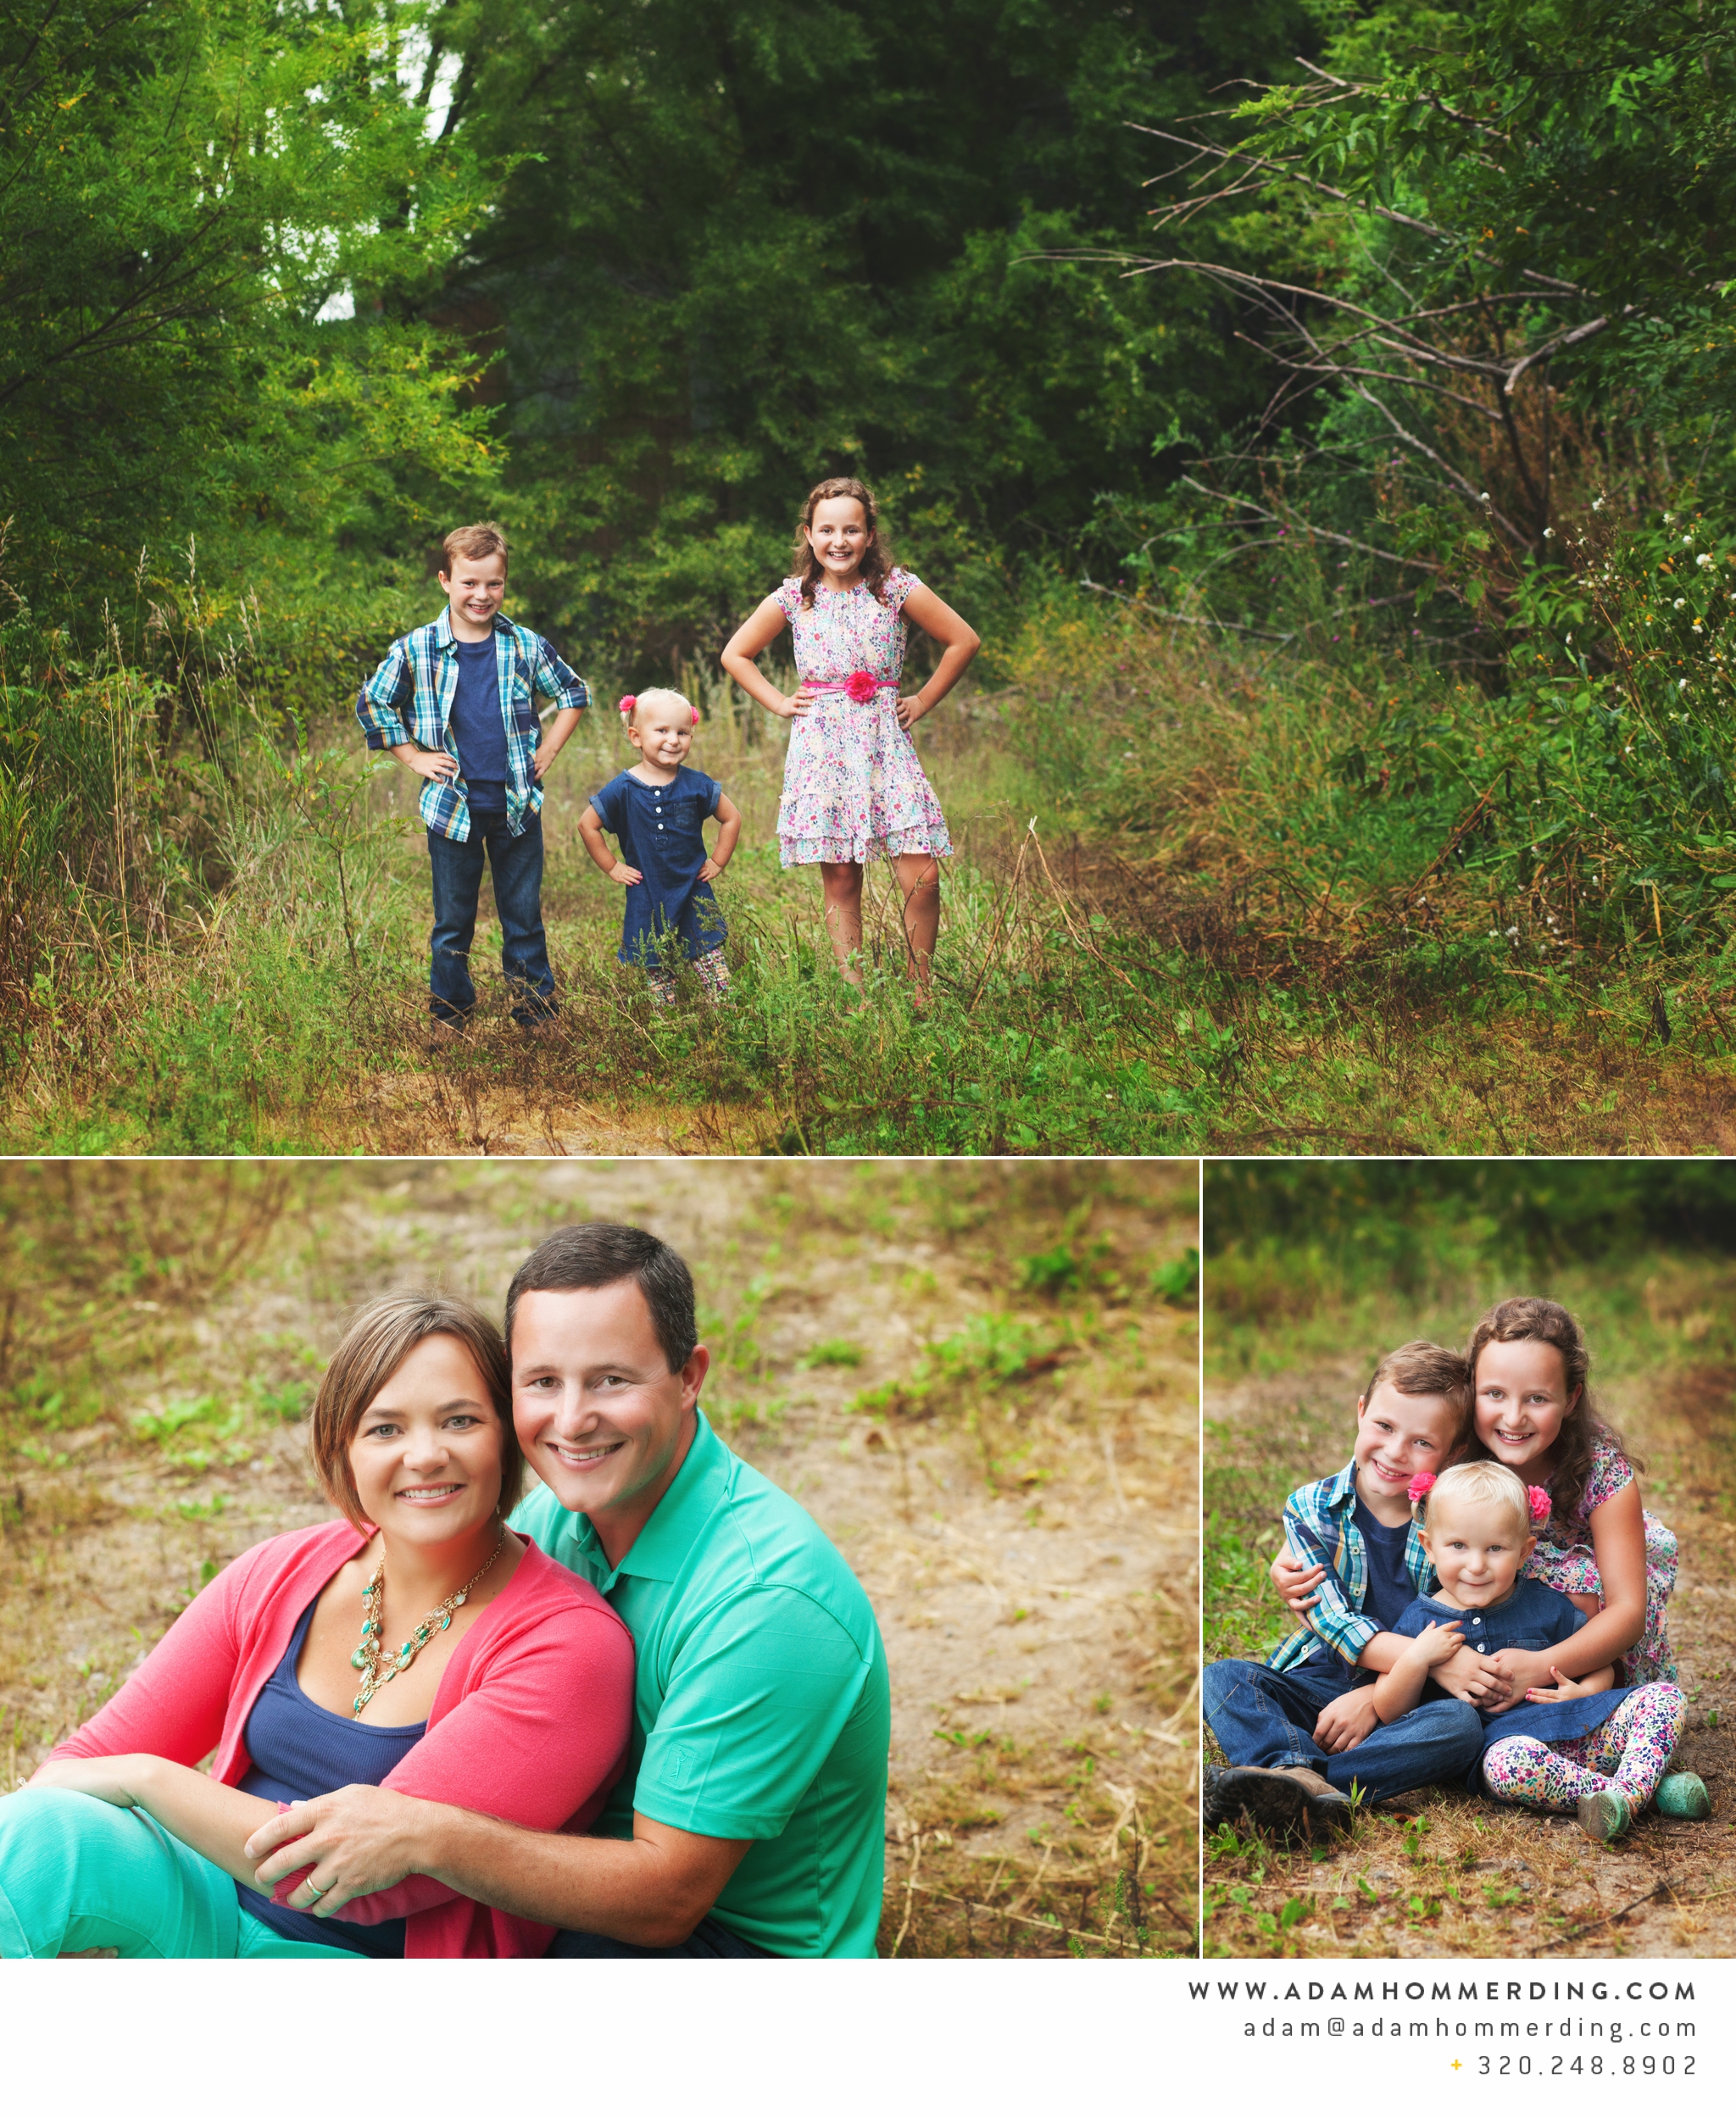 Adam Hommerding PHotography Families